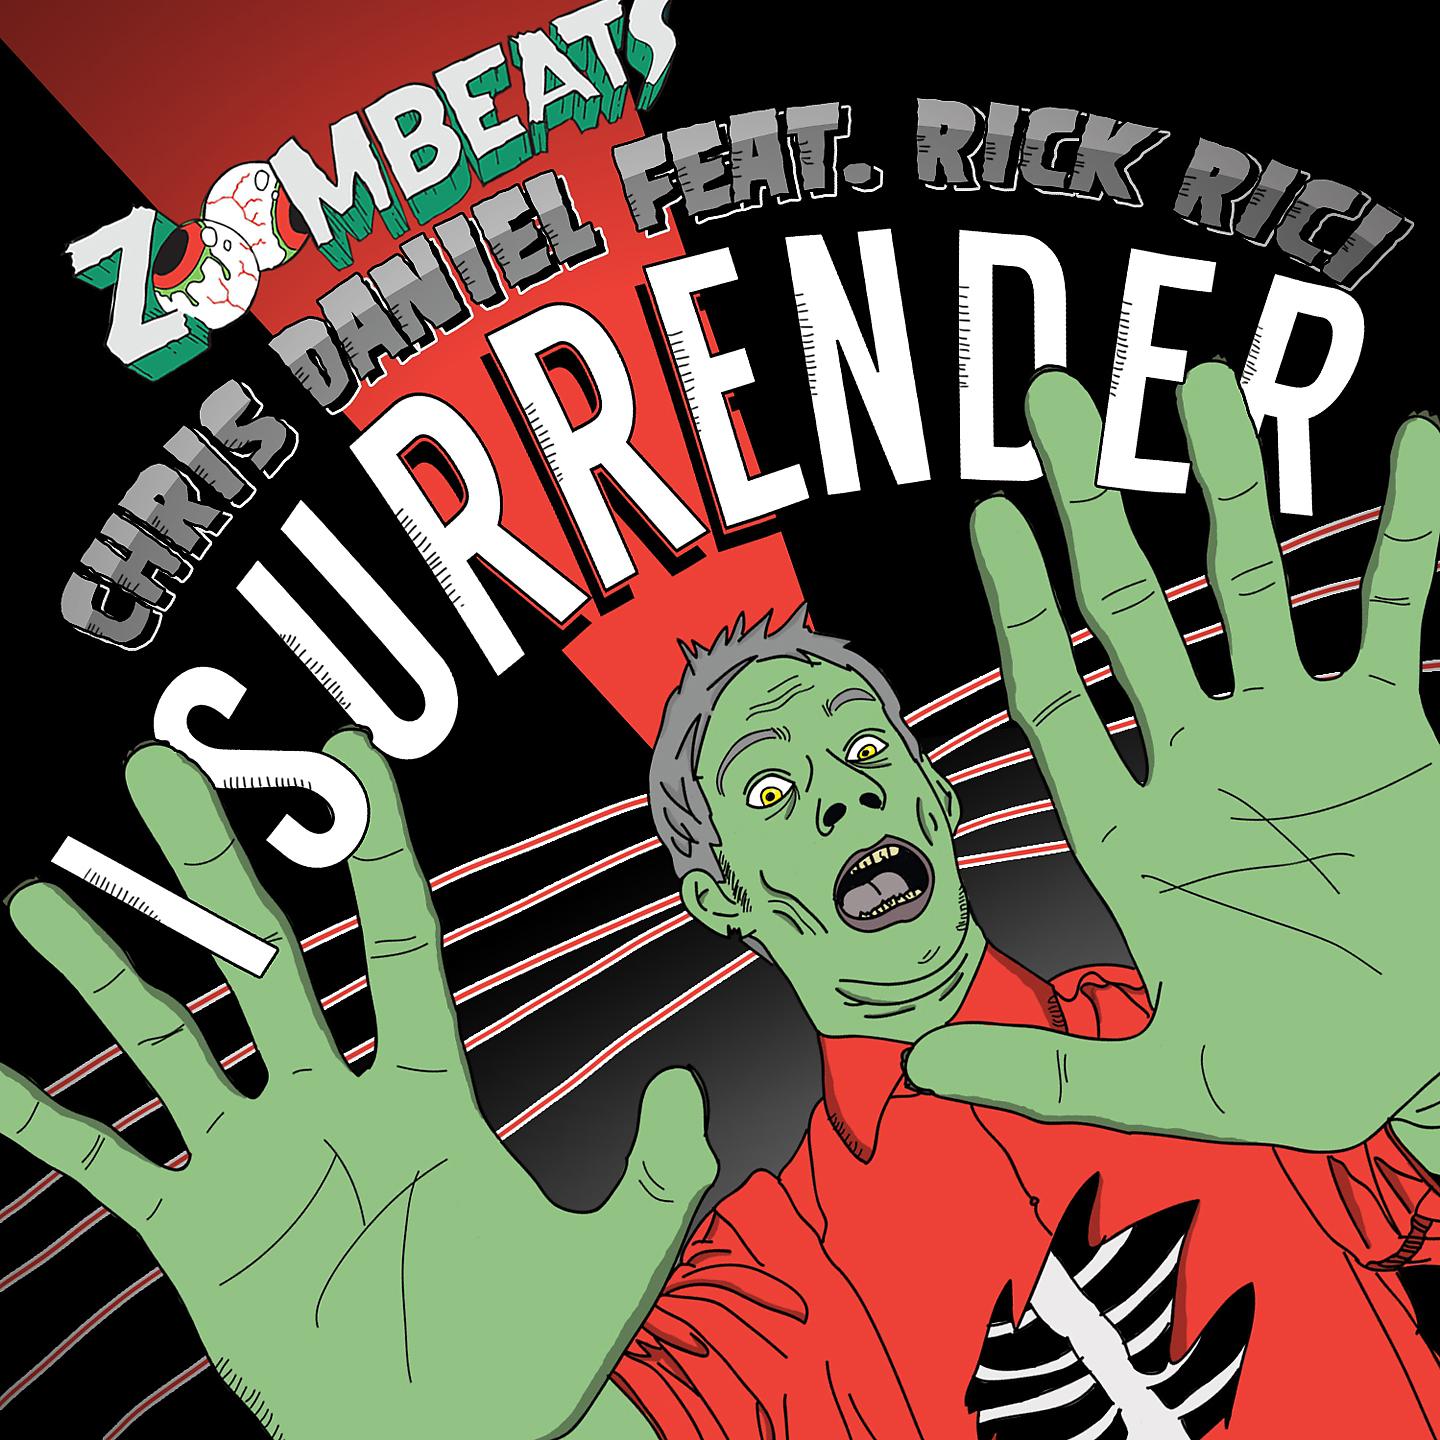 Постер альбома I Surrender